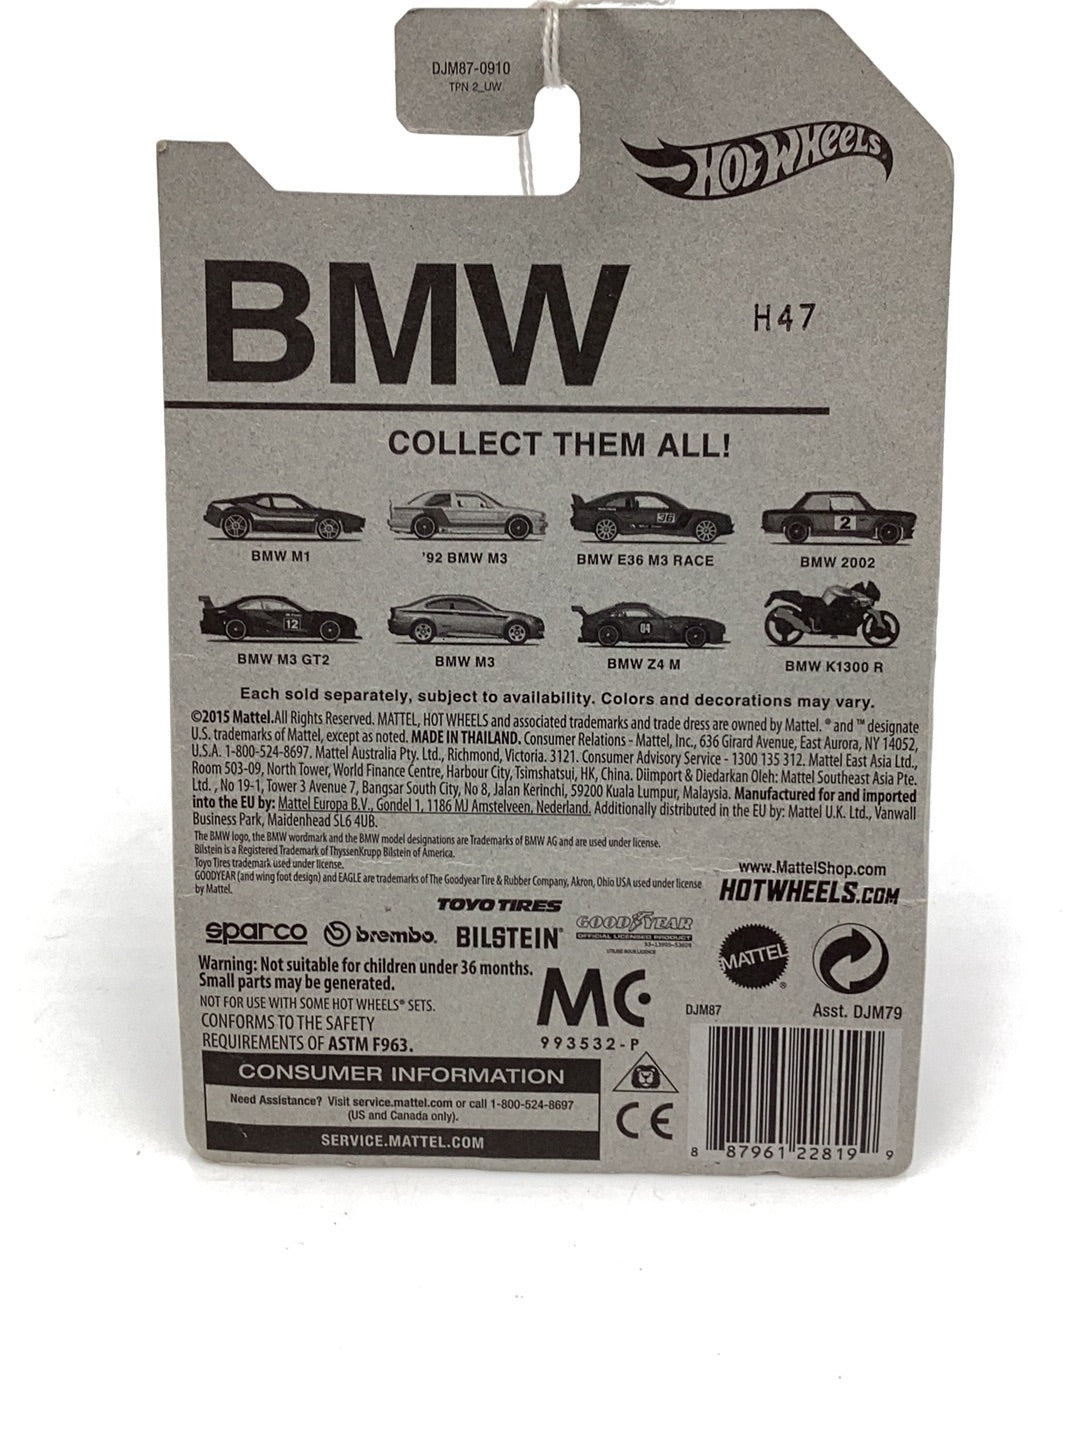 Hot wheels BMW series BMW M3 Walmart exclusive 6/8 cracked blister